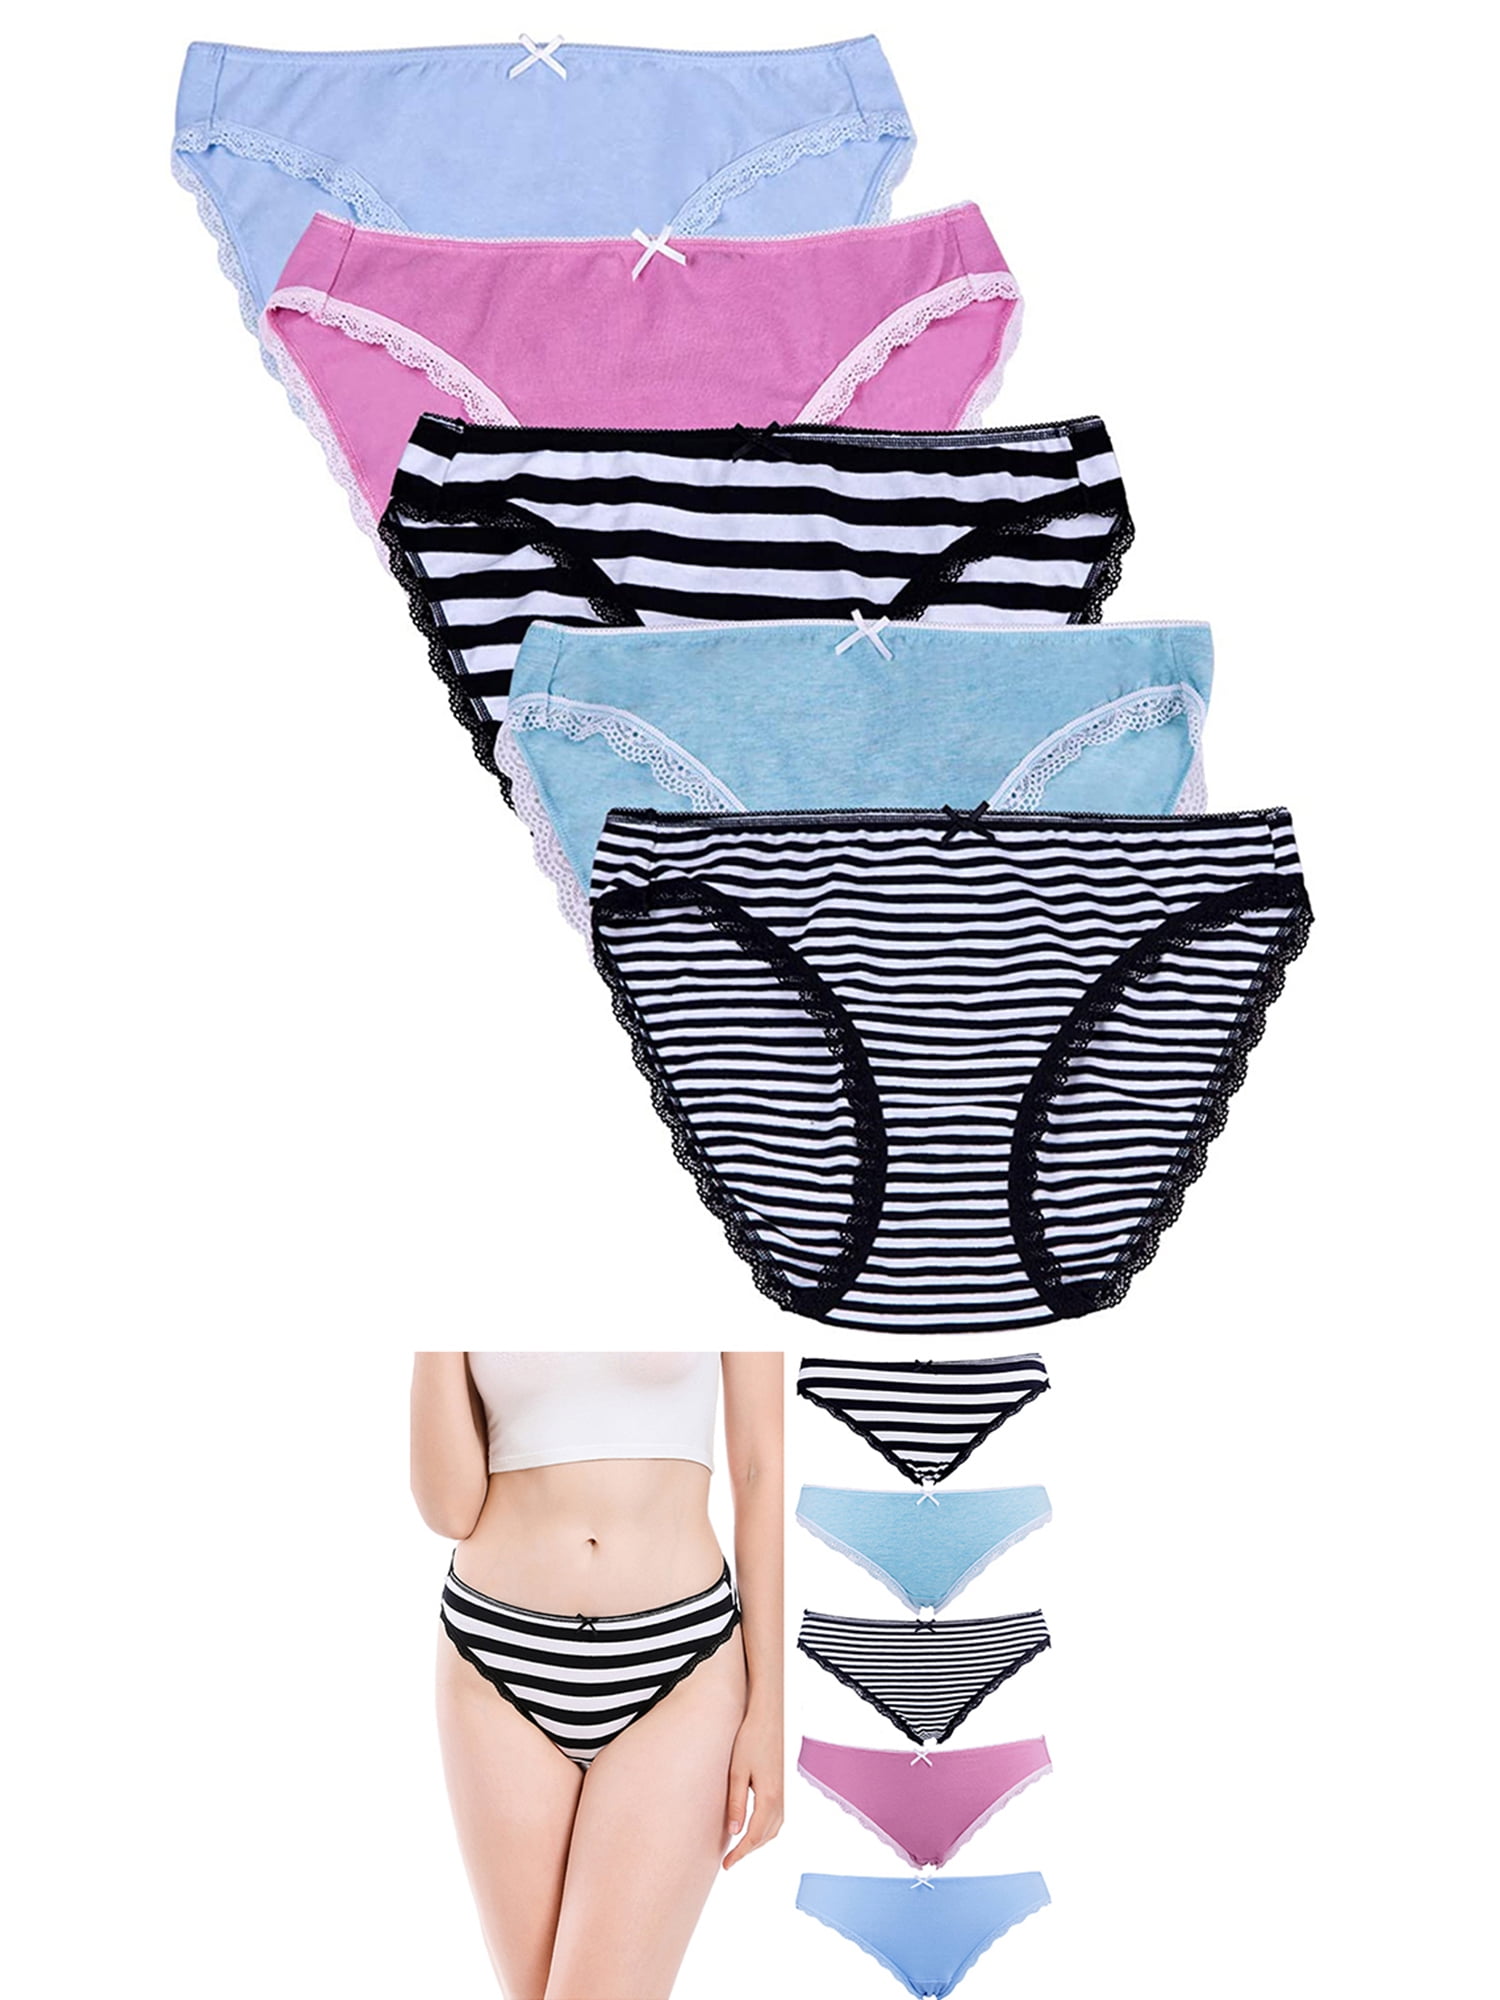 Women Fashion Cotton Underwear Lace Bikini Non-marking Briefs Bowknot  Elastic Mid-waist Briefs Pack of 5 